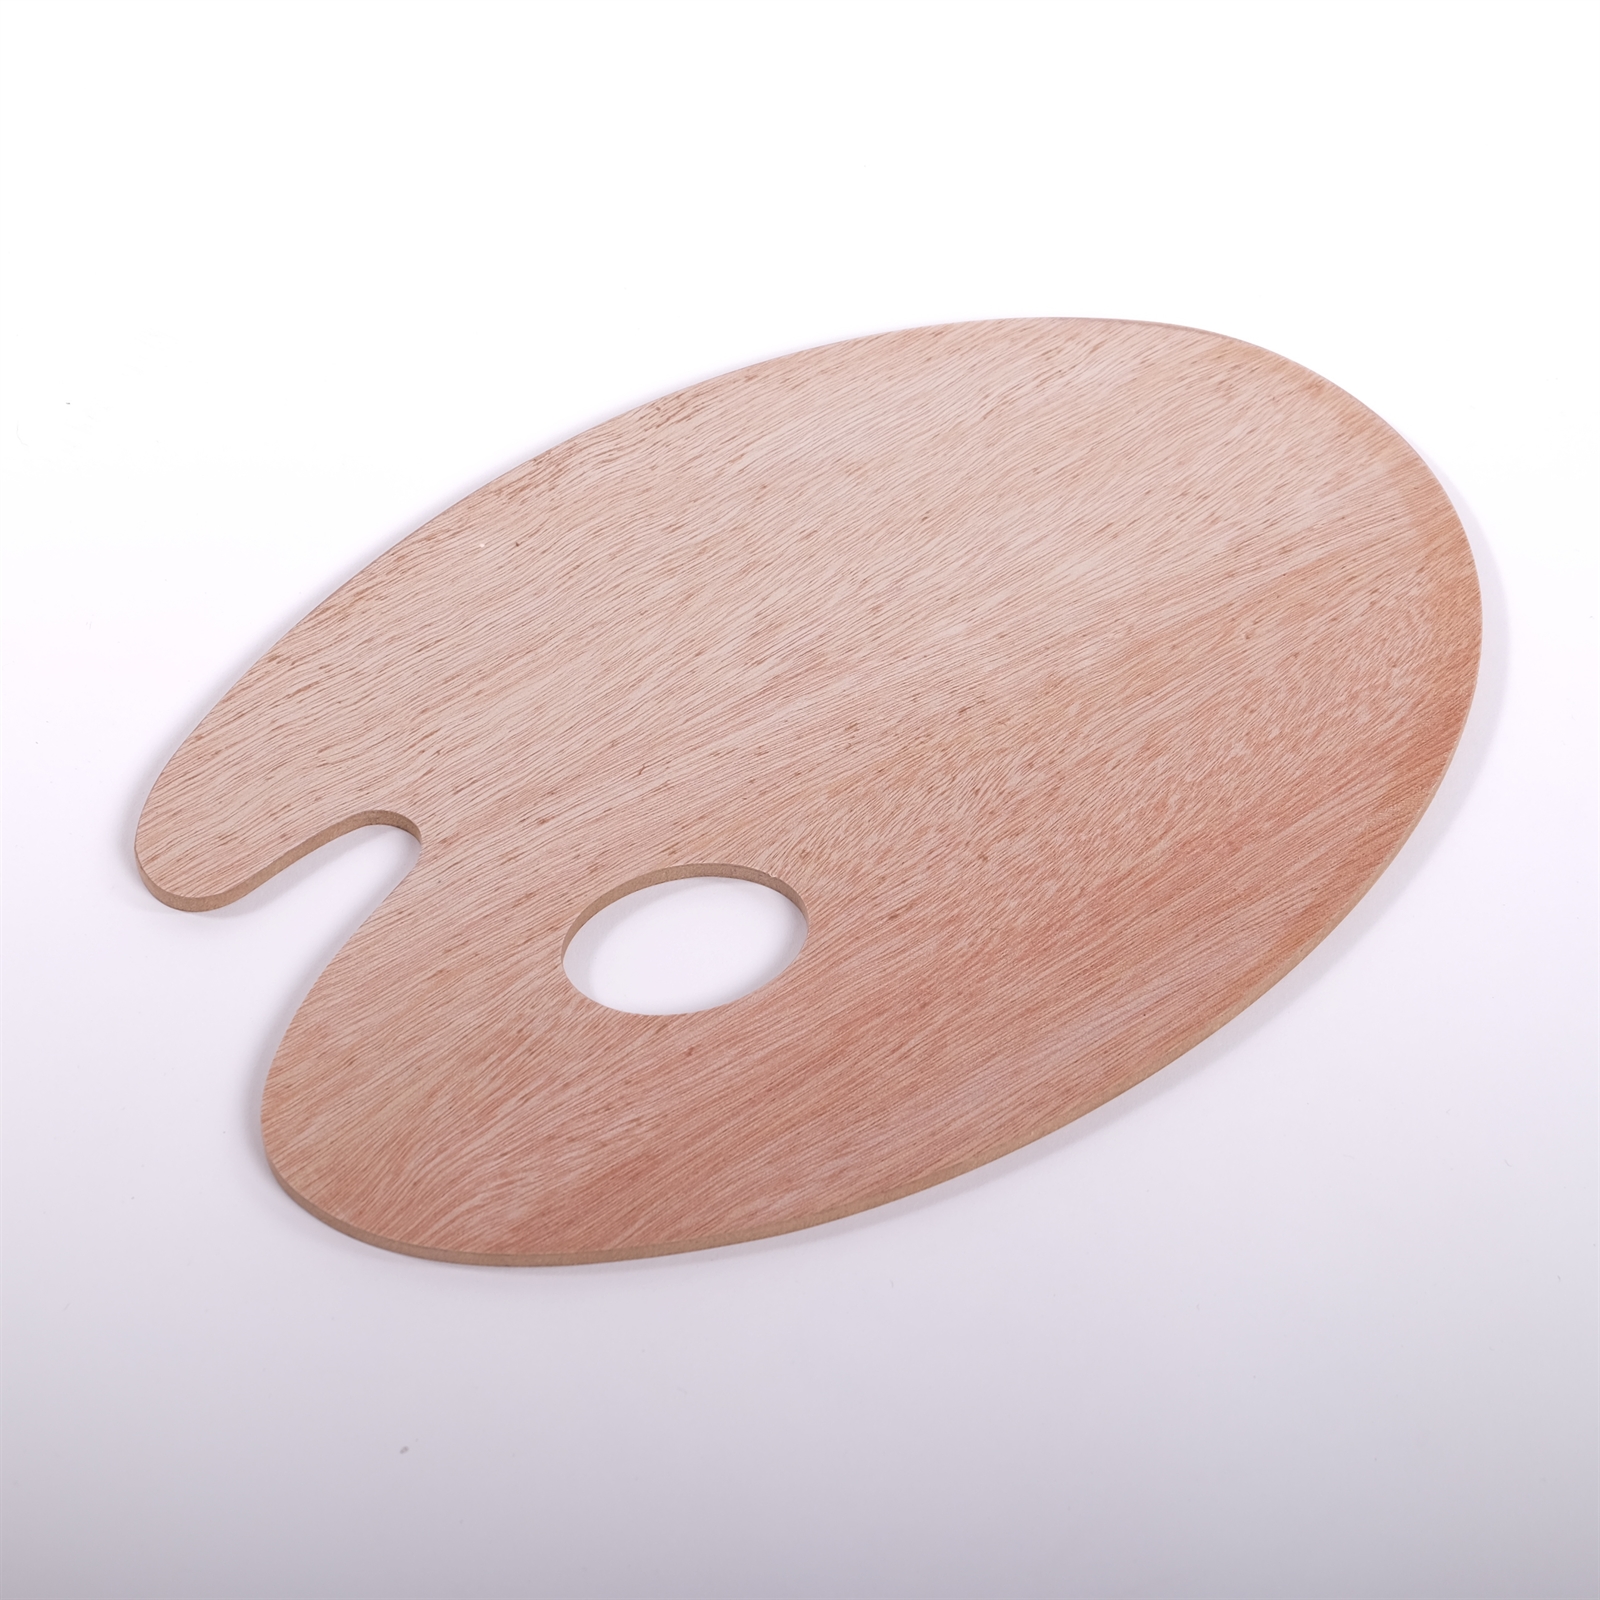 KNSTLER MISCHPALETTE | 30x20 cm, 5 mm, oval | Holz Farbpalette                 